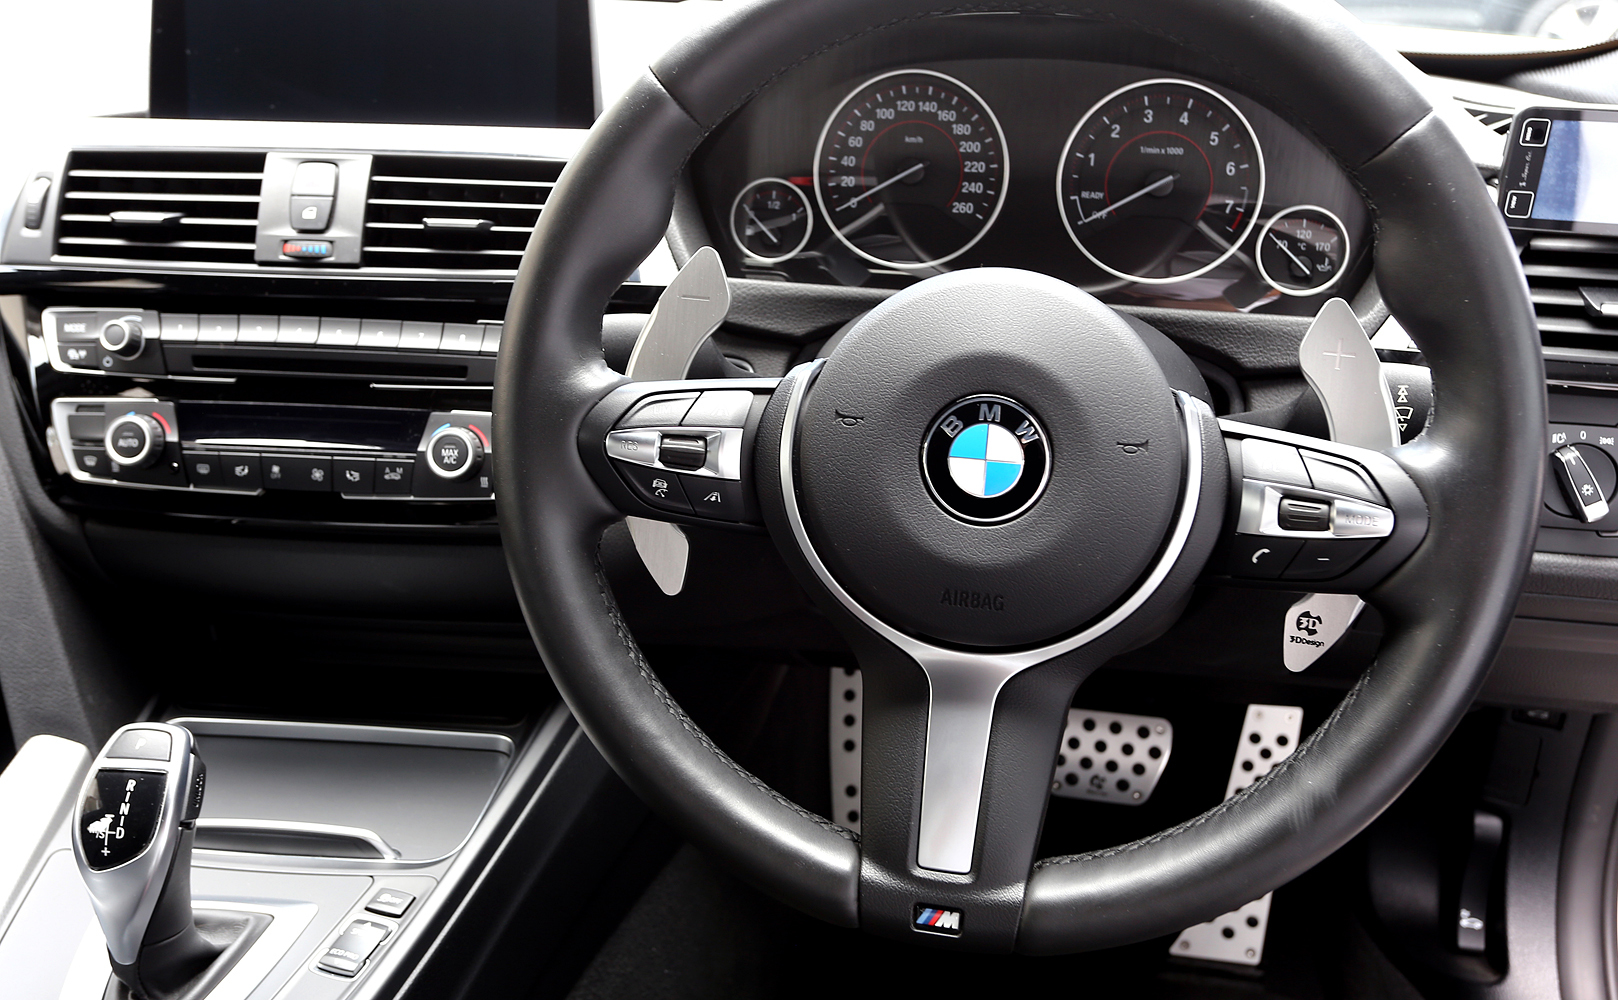 BMW F系パドル車用の3Dデザイン・パドルシフターが発売されました 